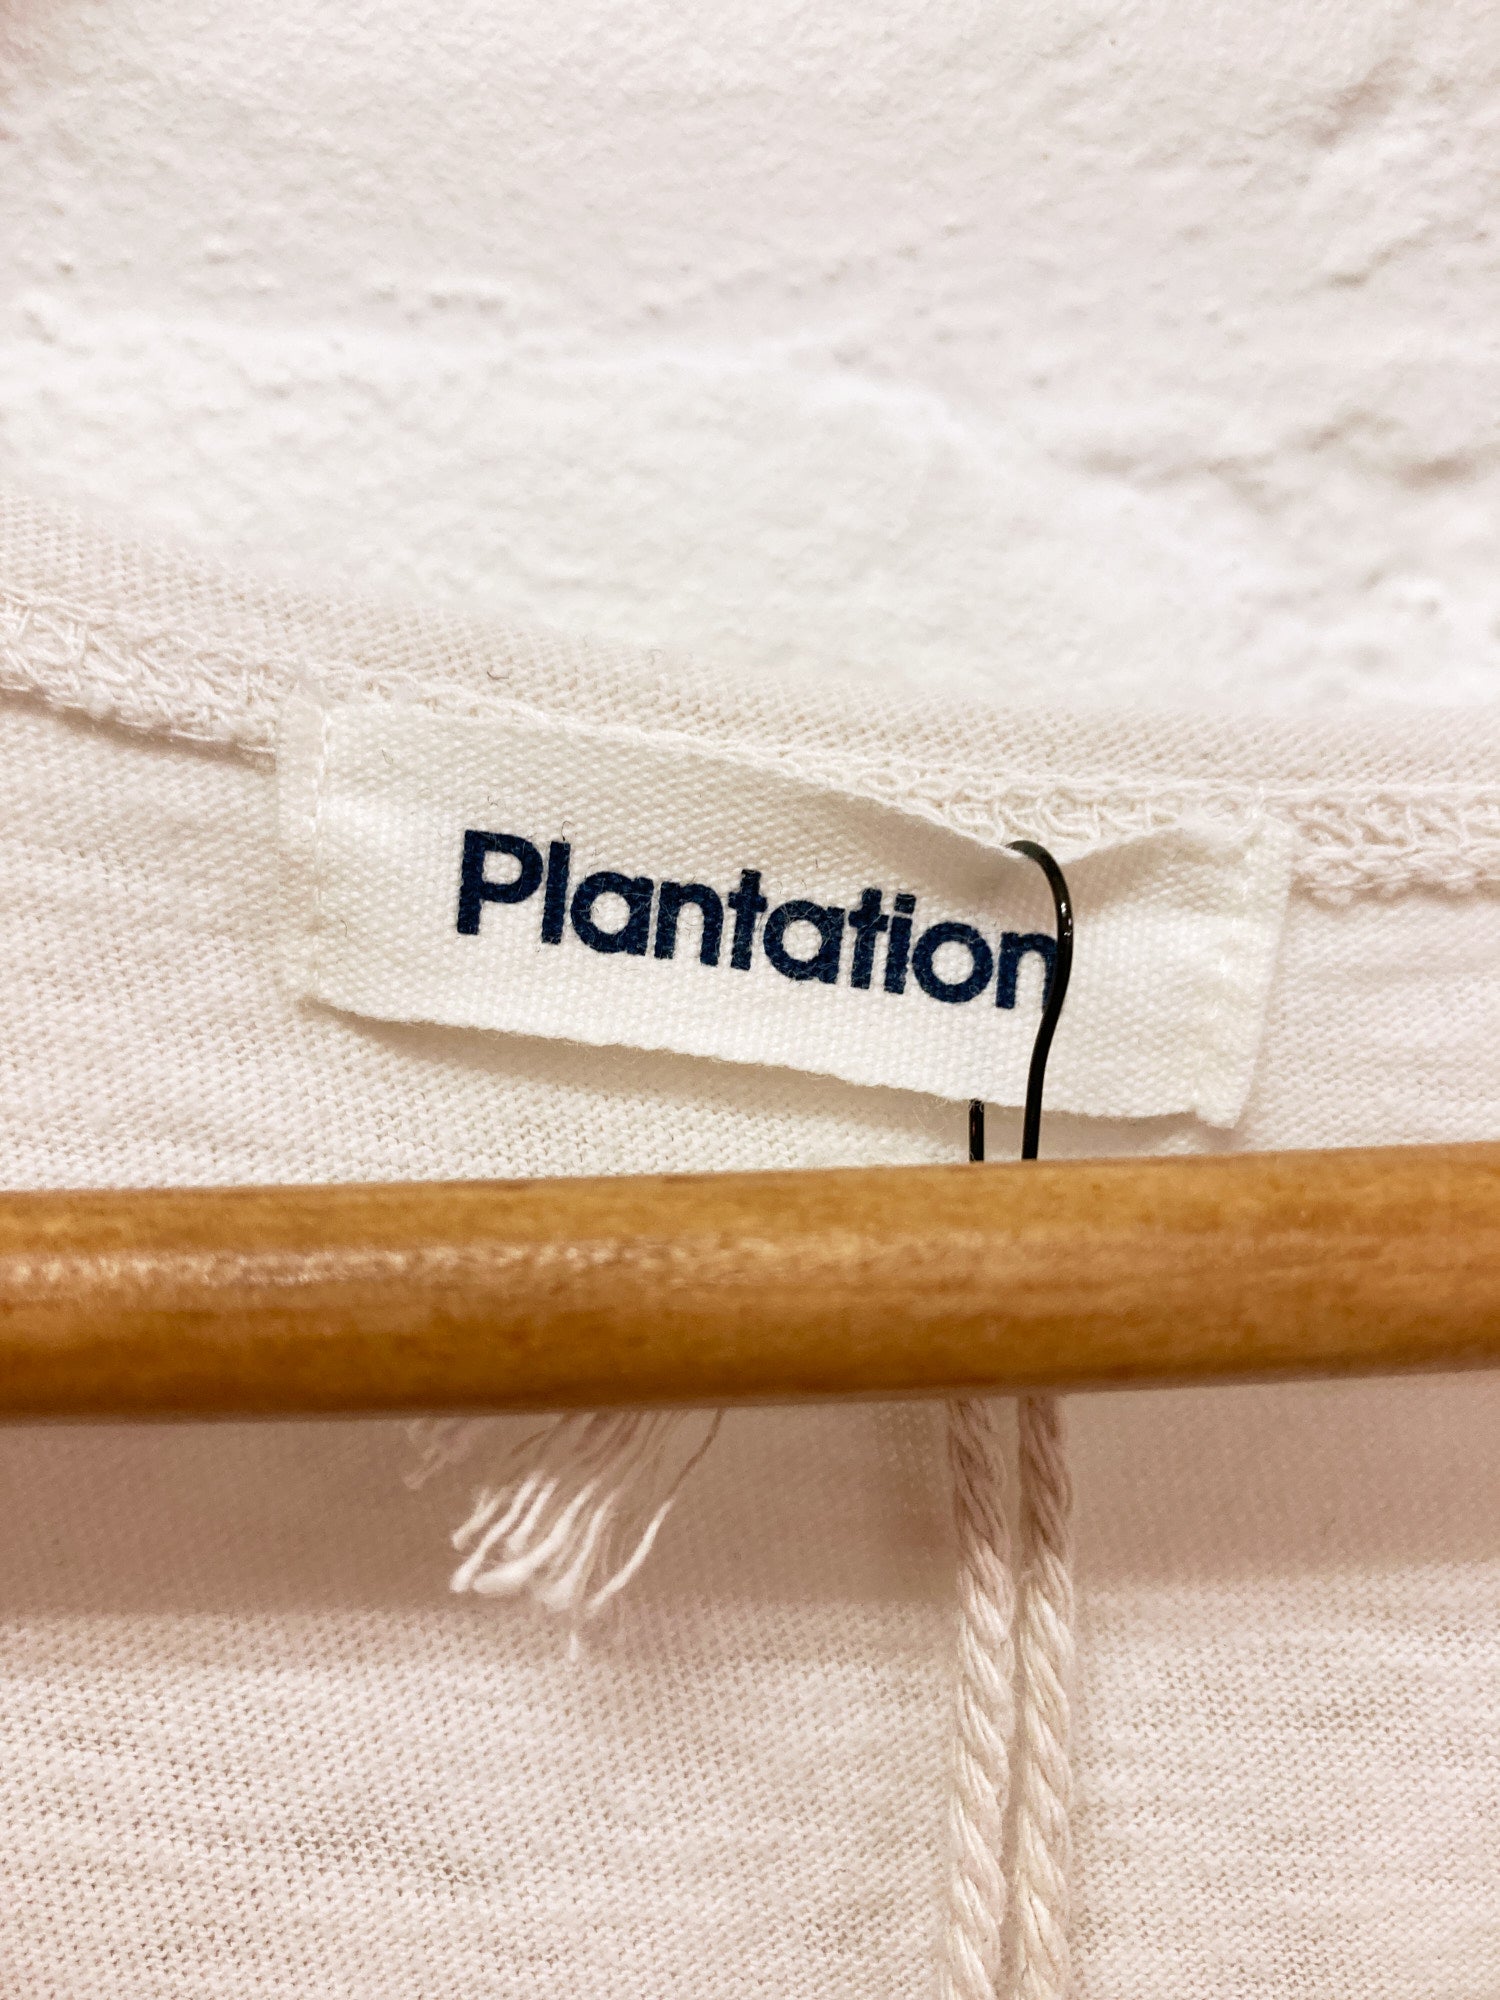 Plantation off white cotton jersey singlet - M S XS